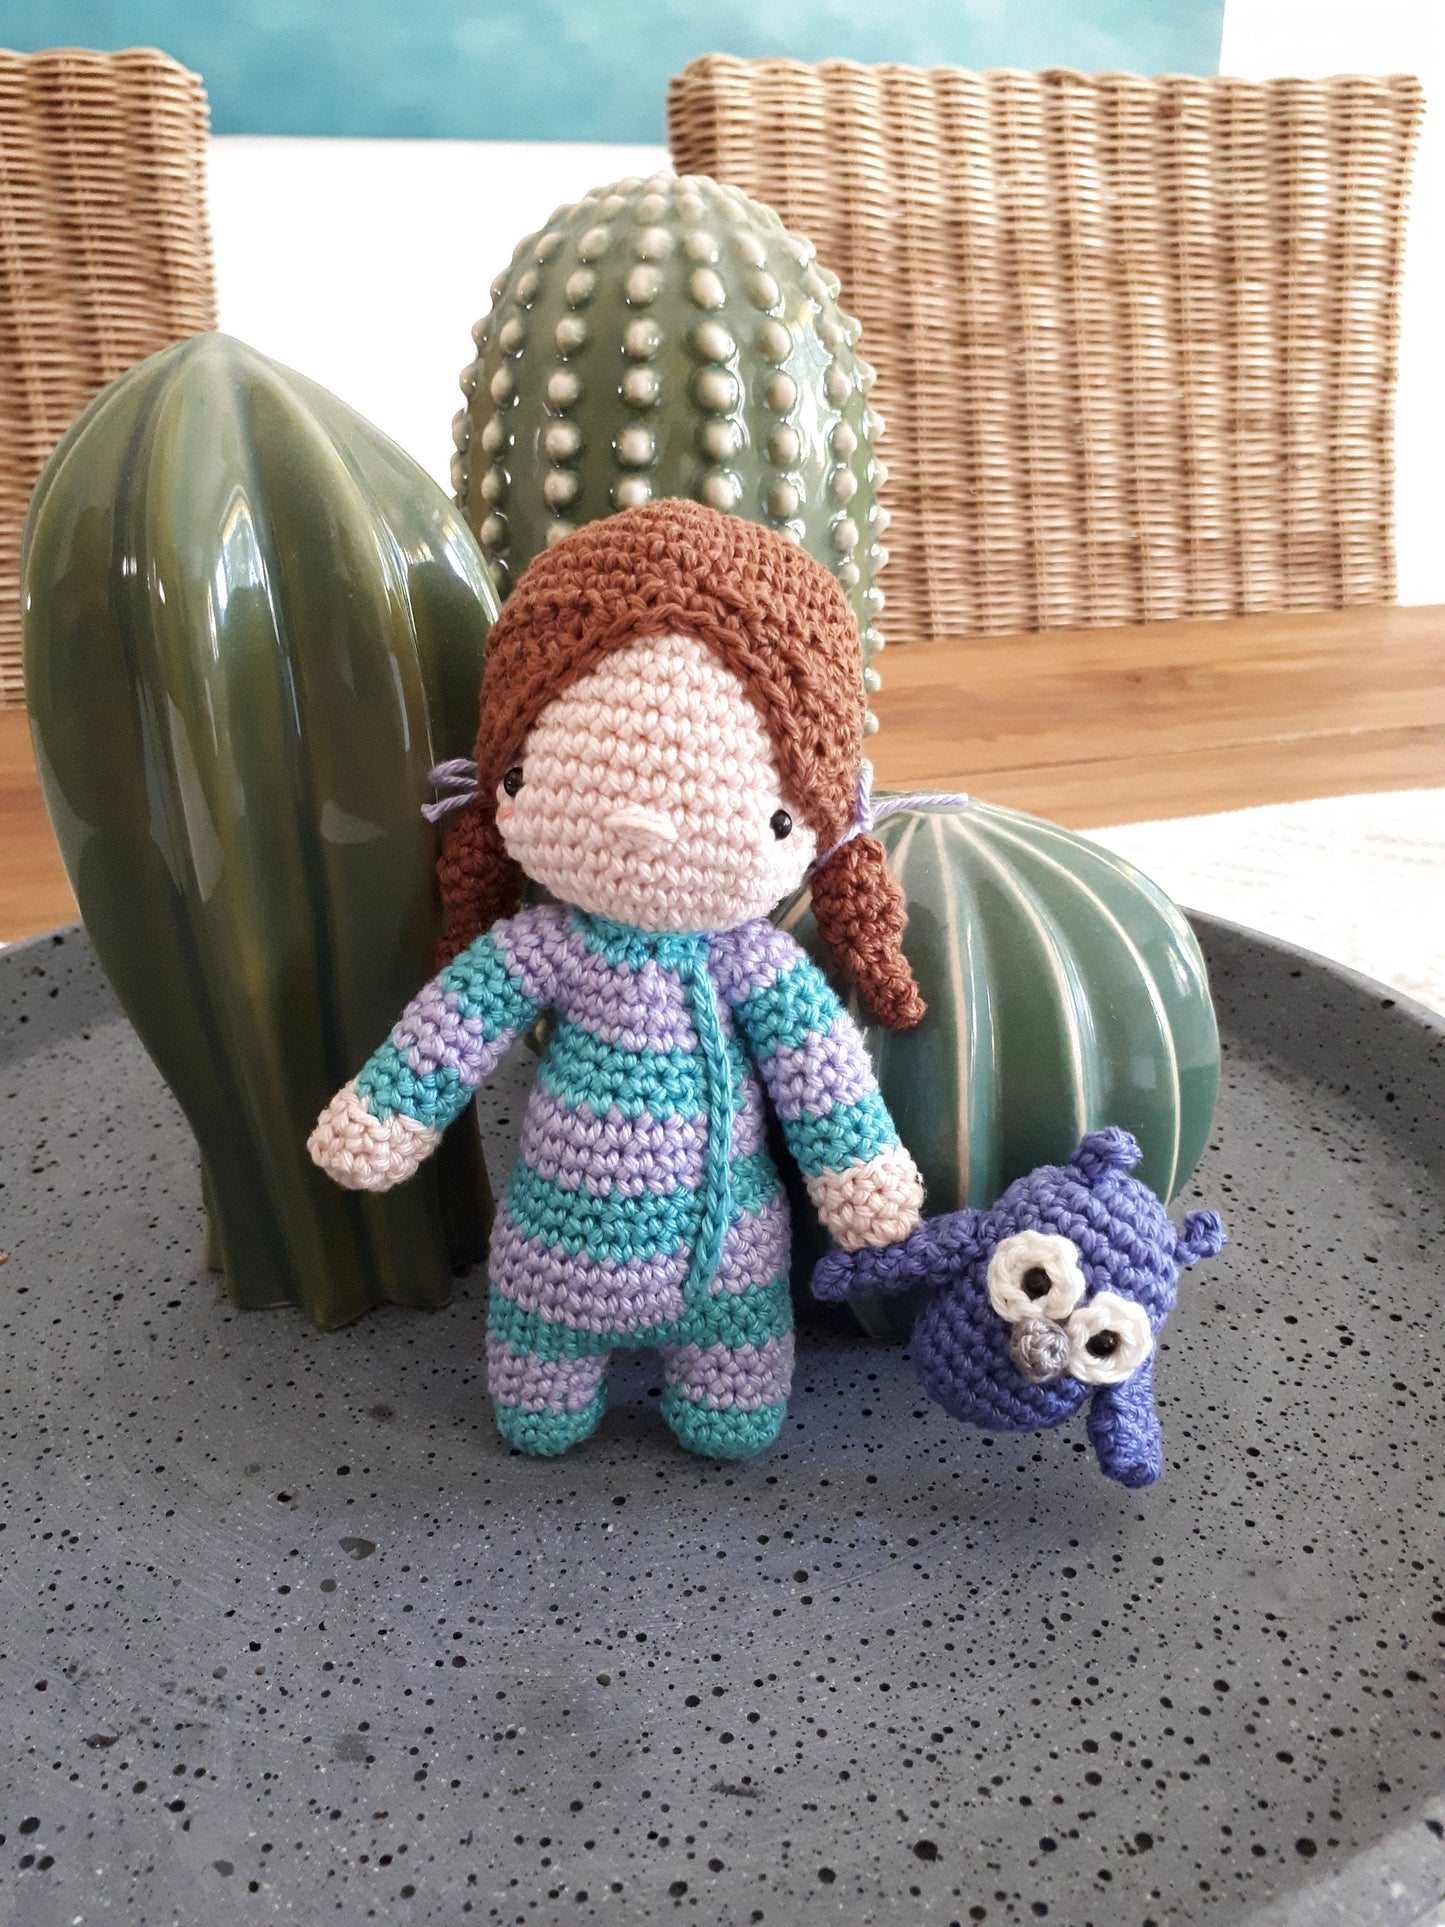 Sleepy Jenny crochet doll